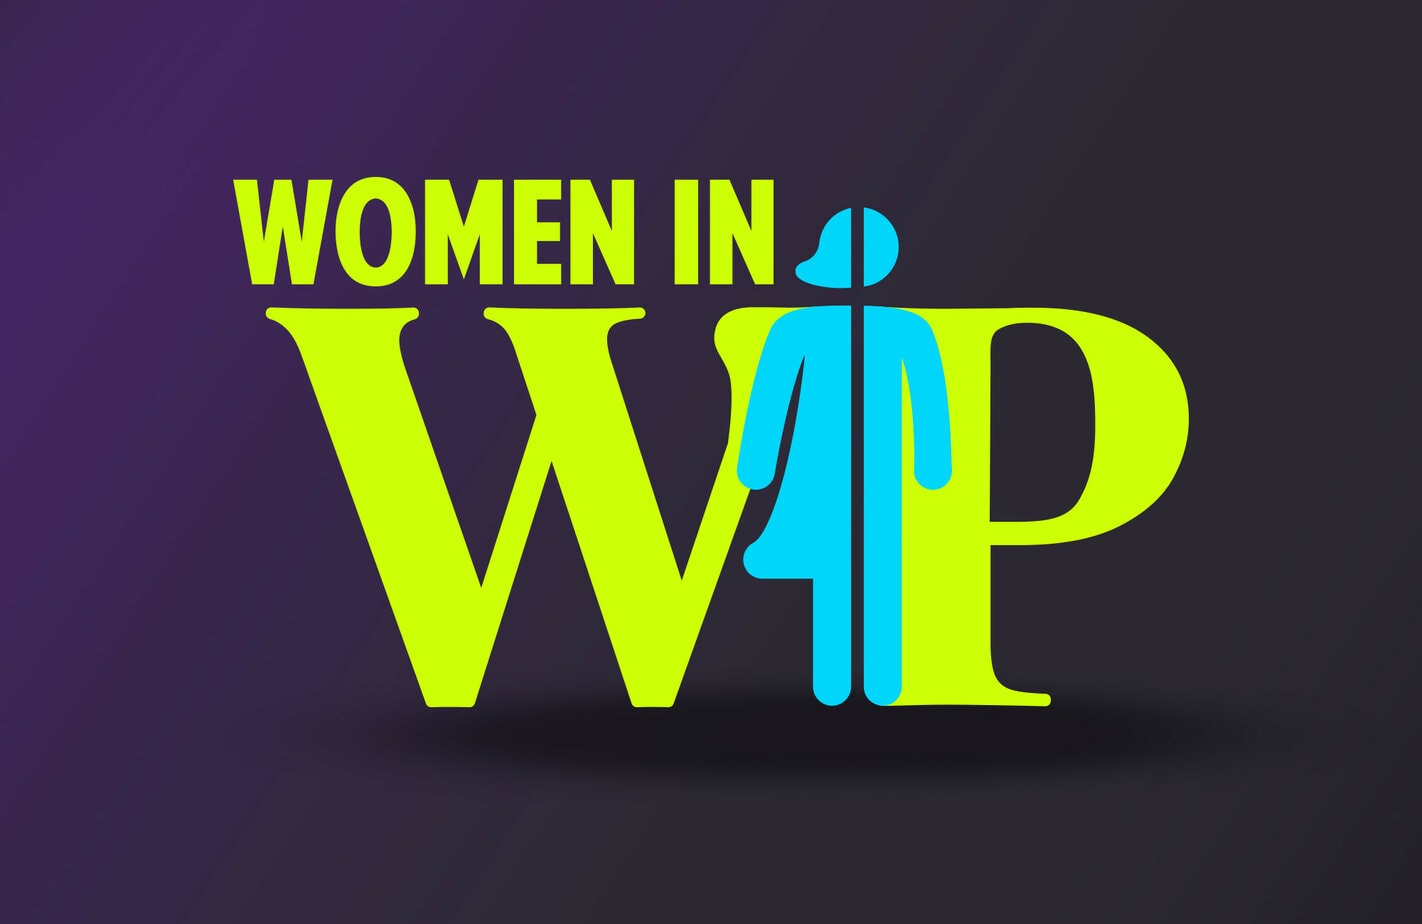 Women in Wordpress podcast logo.